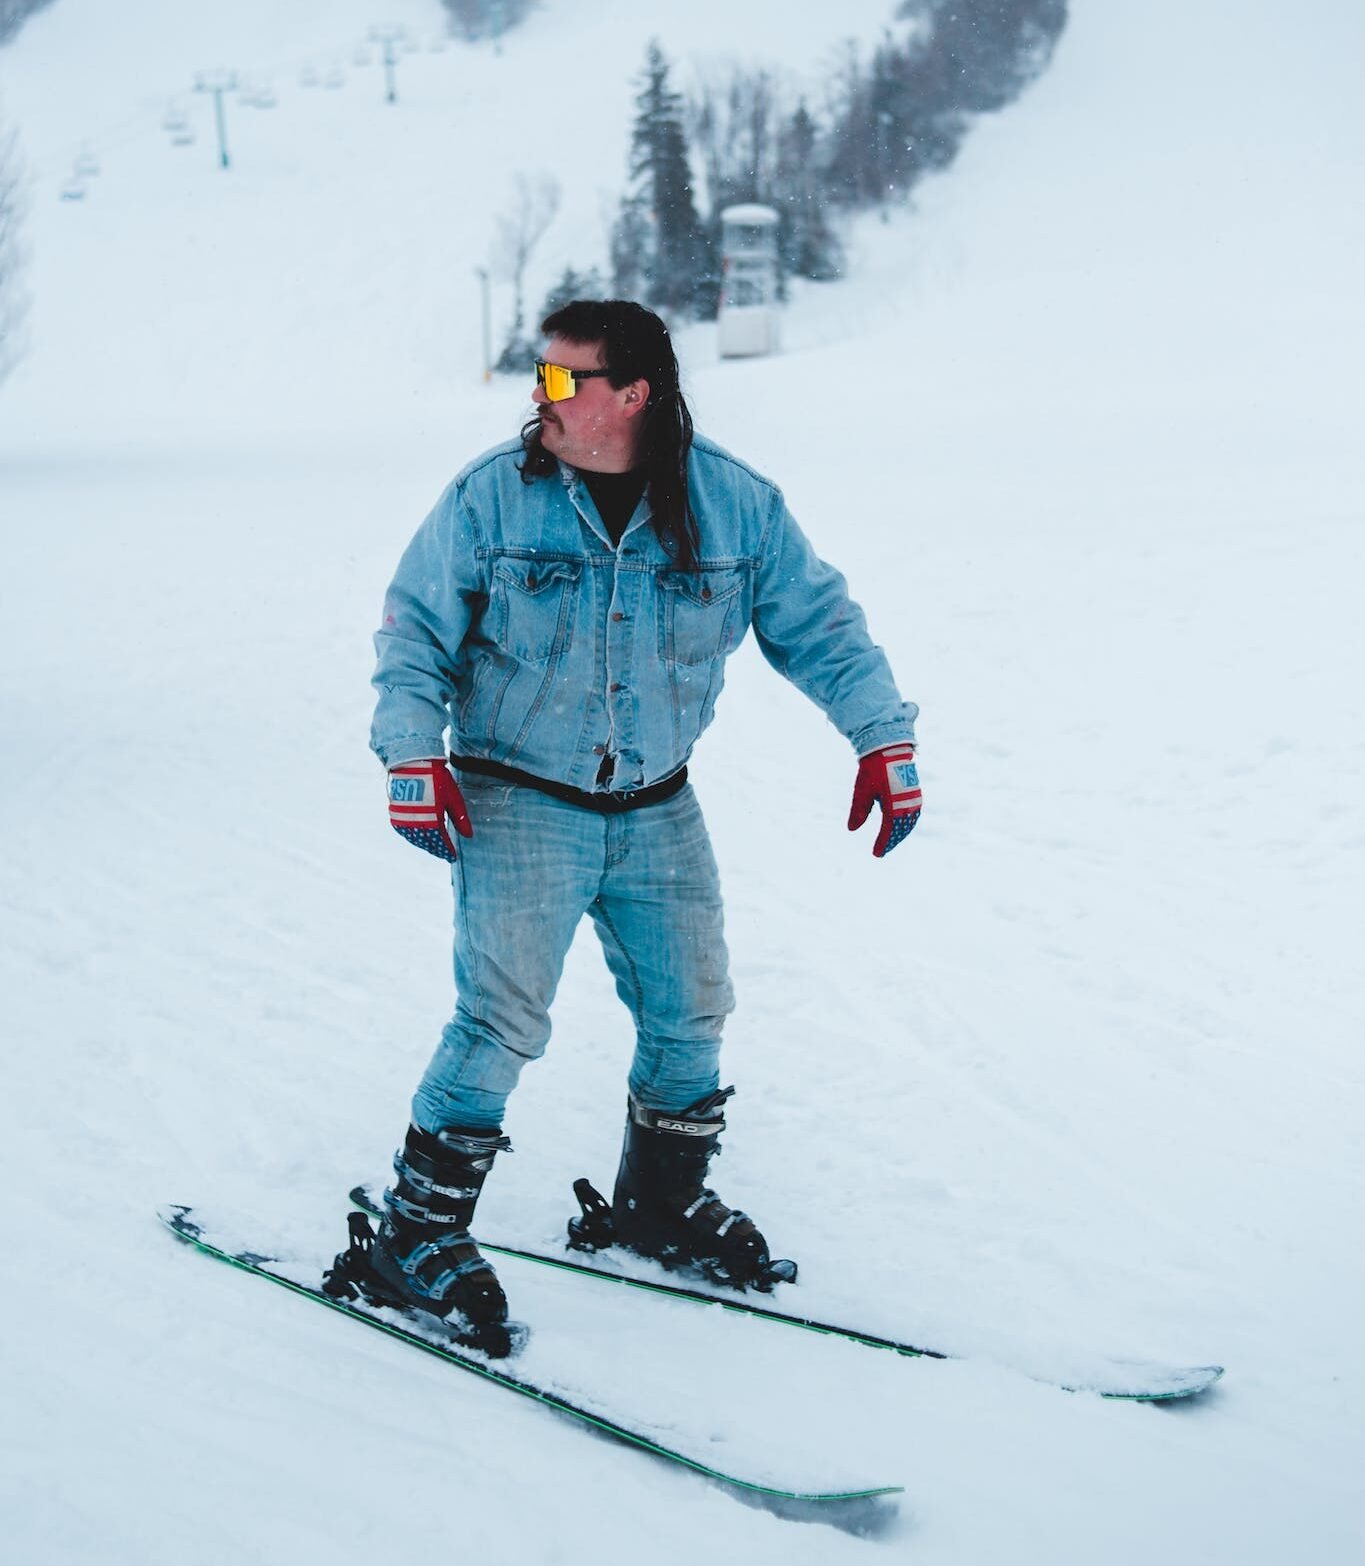 Stylish skier in glasses on snowy slope